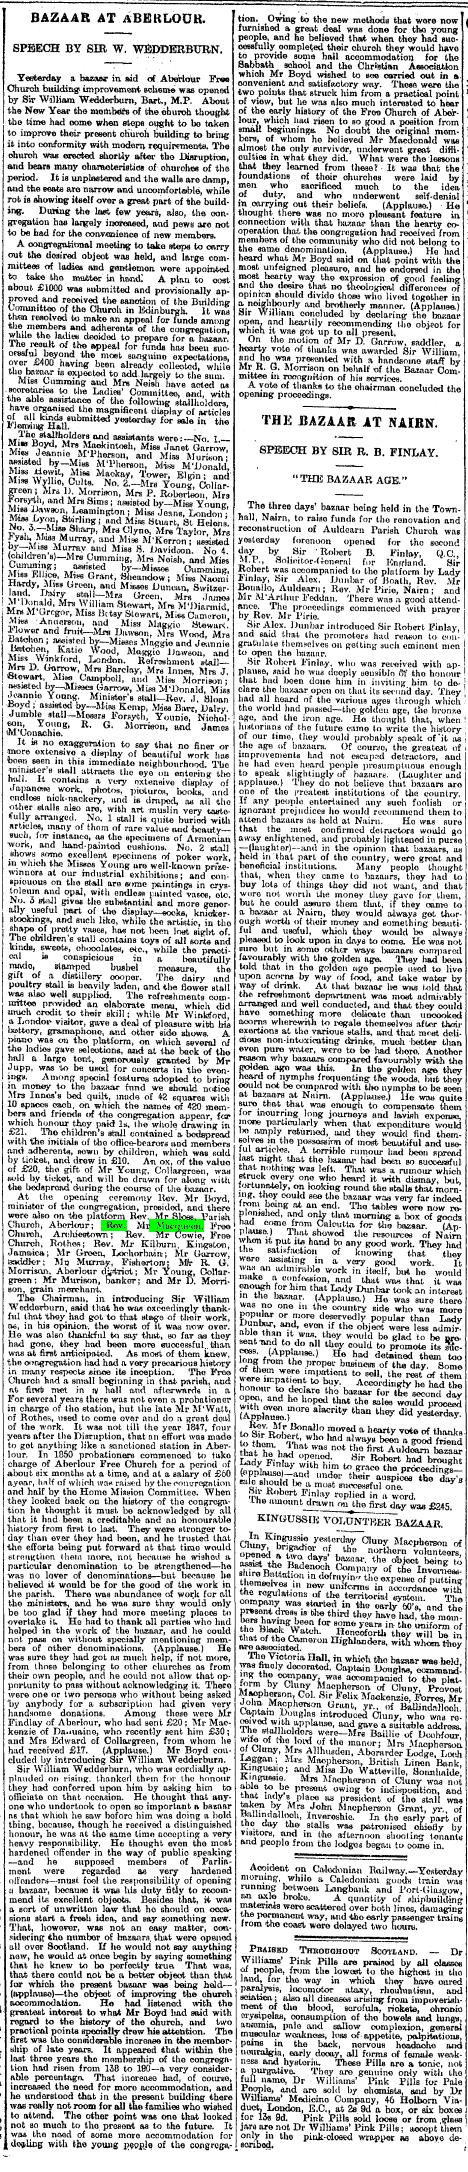 1898-08-20 Aberdeen Weekly Journal